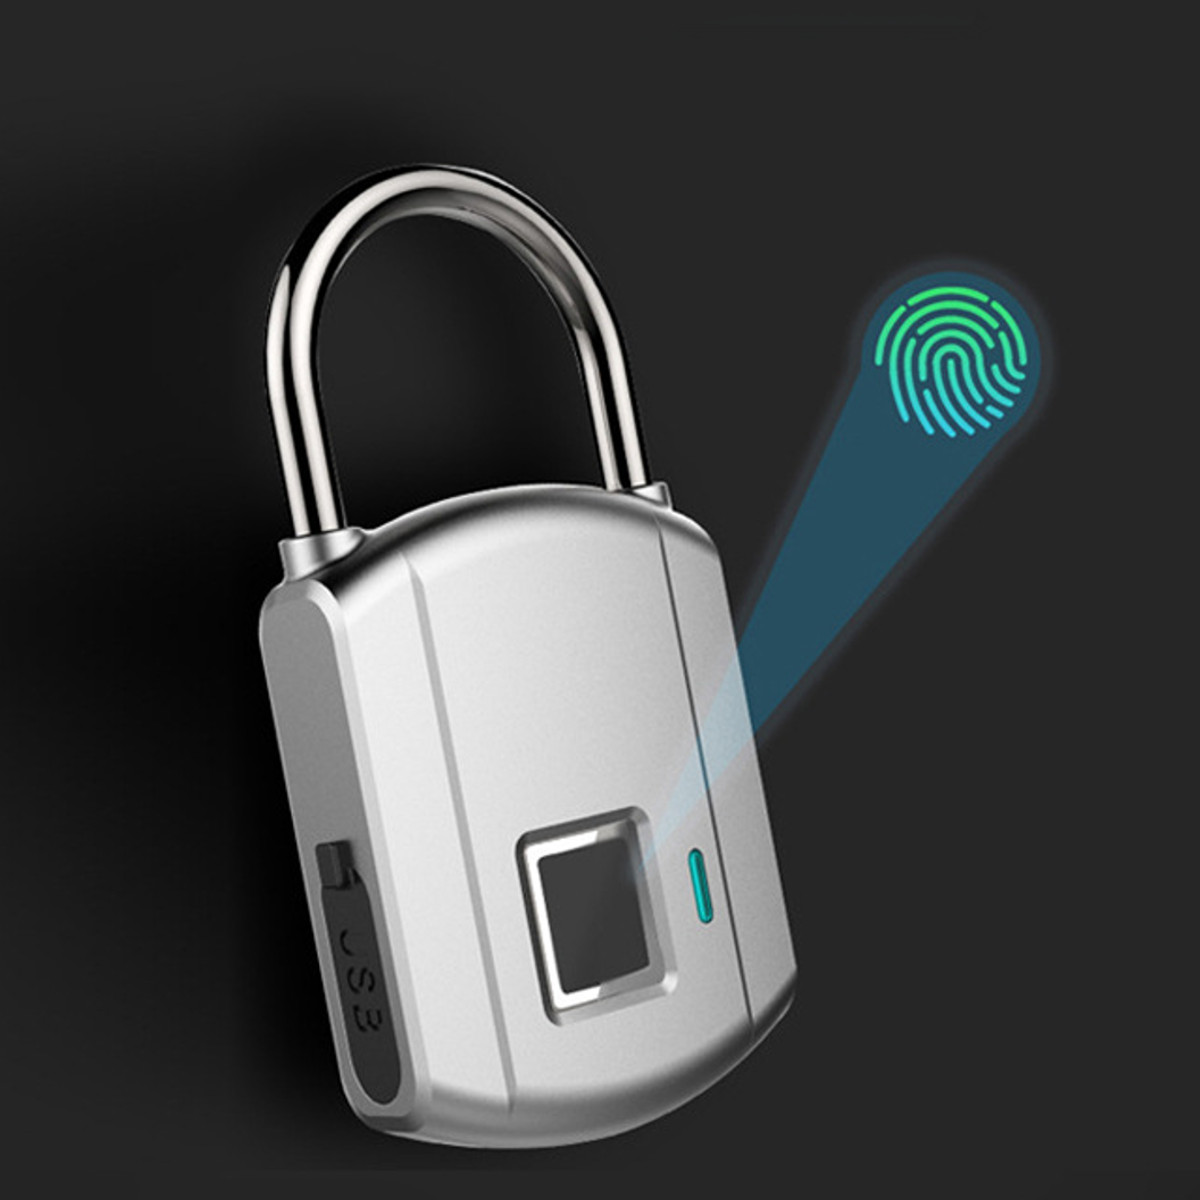 USB-Smart-Fingerprint-Lock-Anti-Theft-Padlock-Keyless-Door-Luggage-Case-Lock-1584265